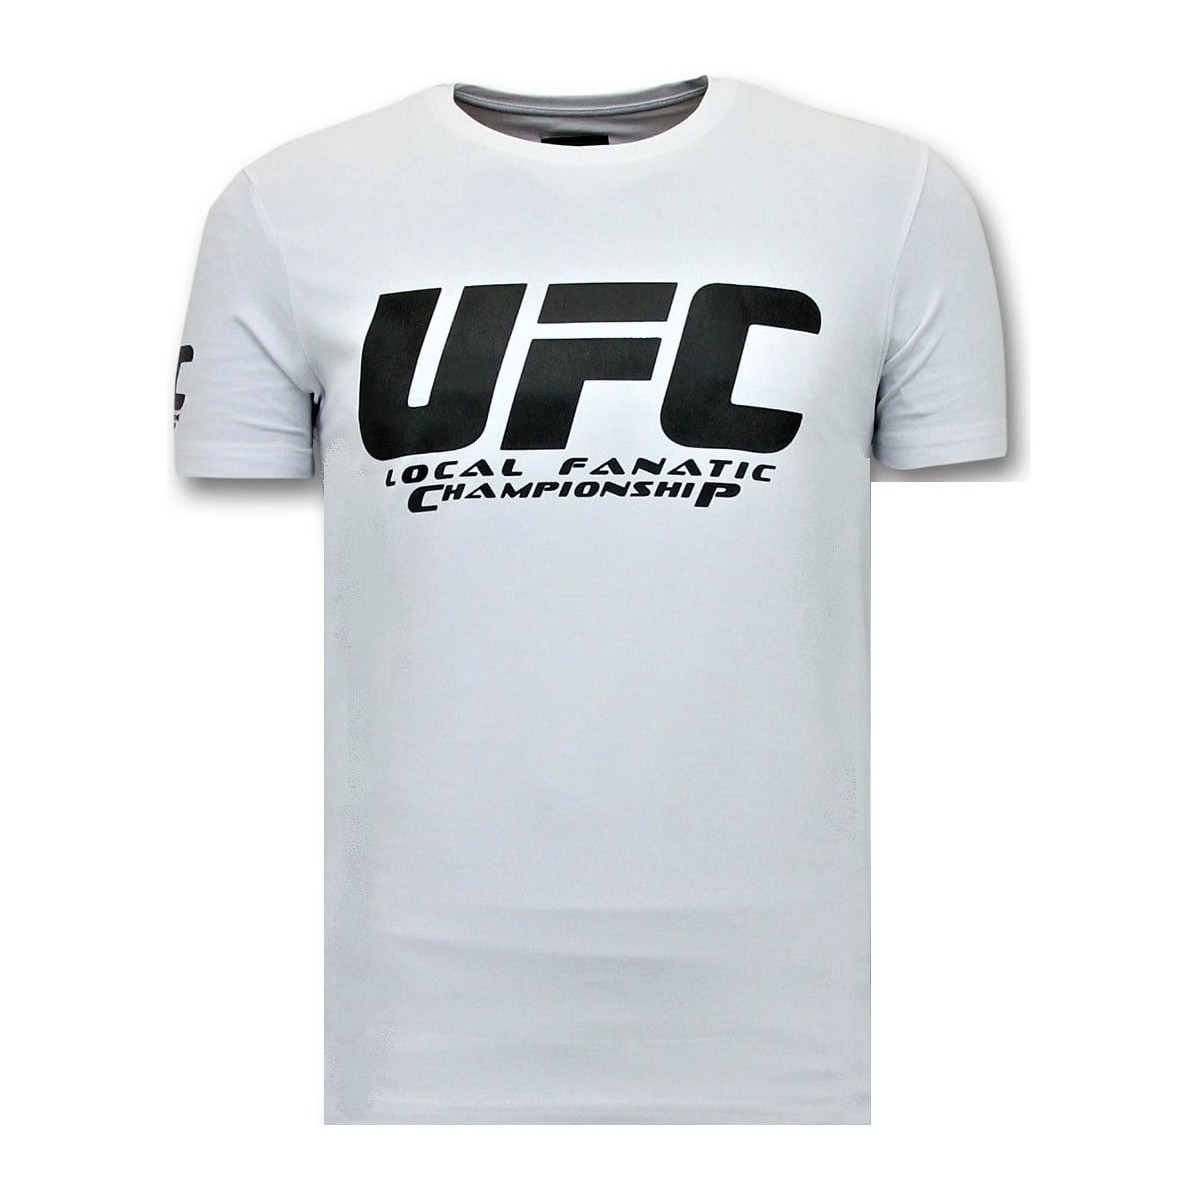 textil Herr T-shirts Local Fanatic Mens Print UFC Championship Vit